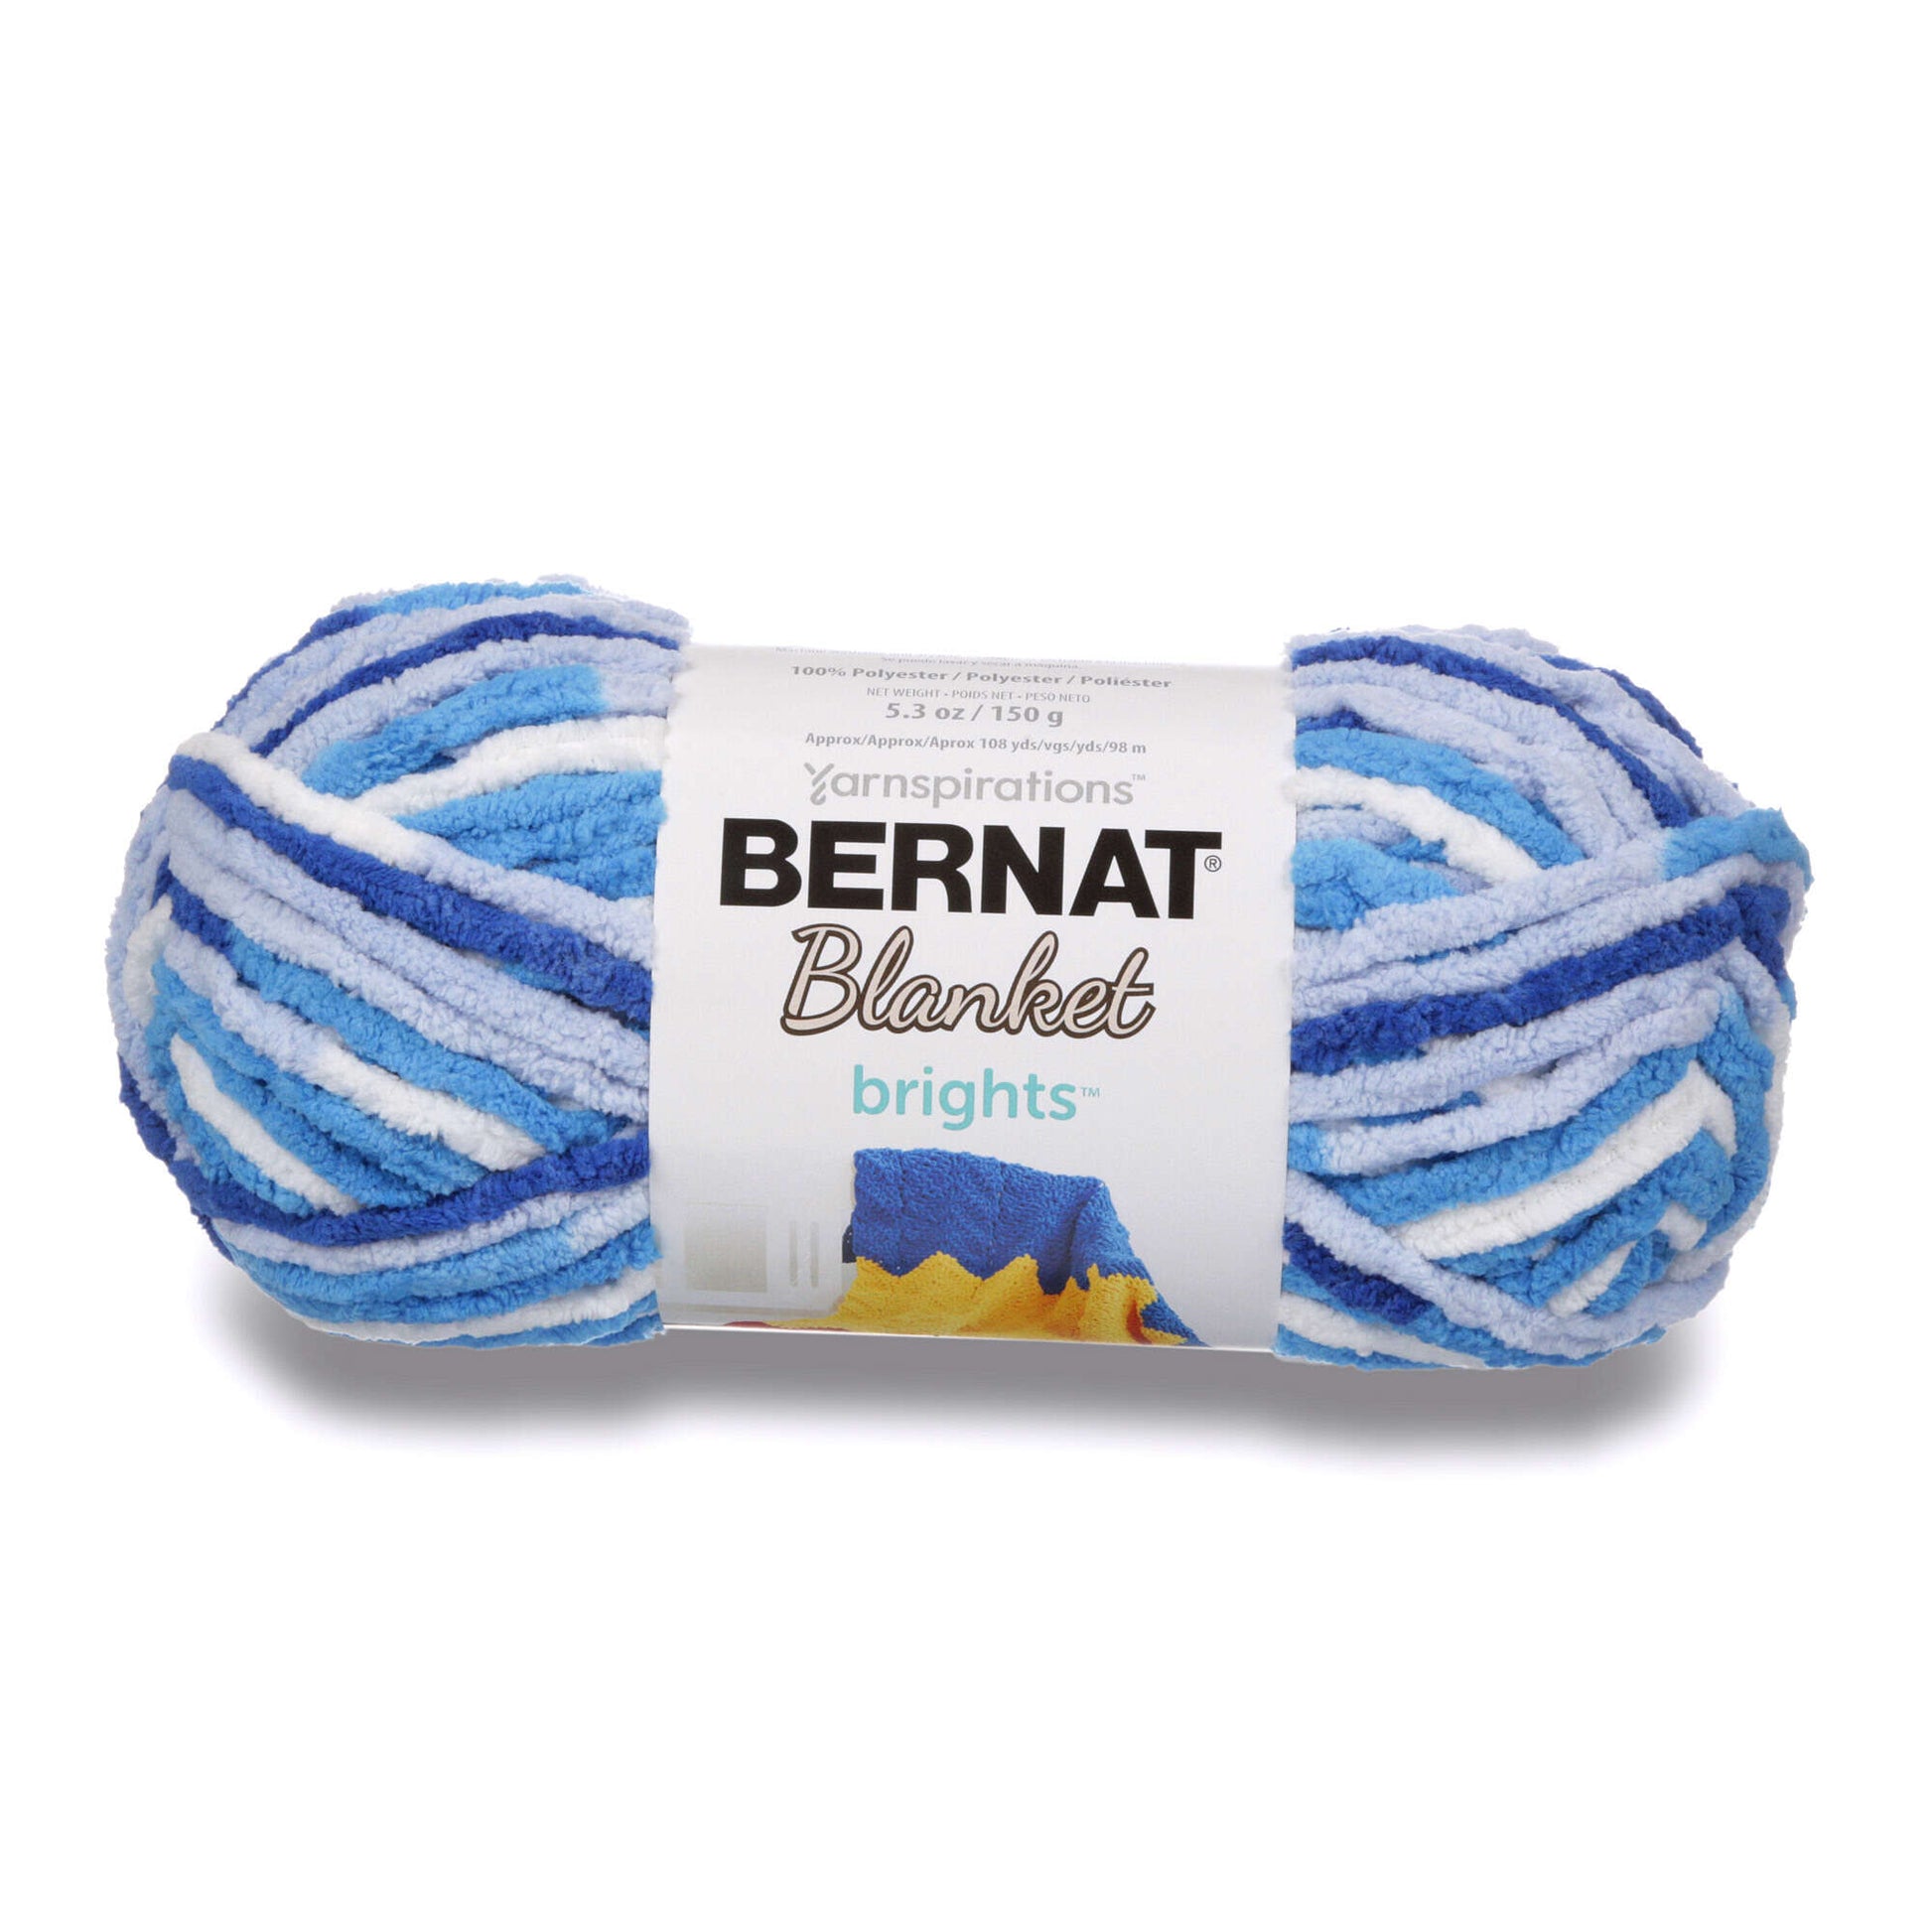 Luxurious Bernat Blanket Yarn - Soft and Cozy